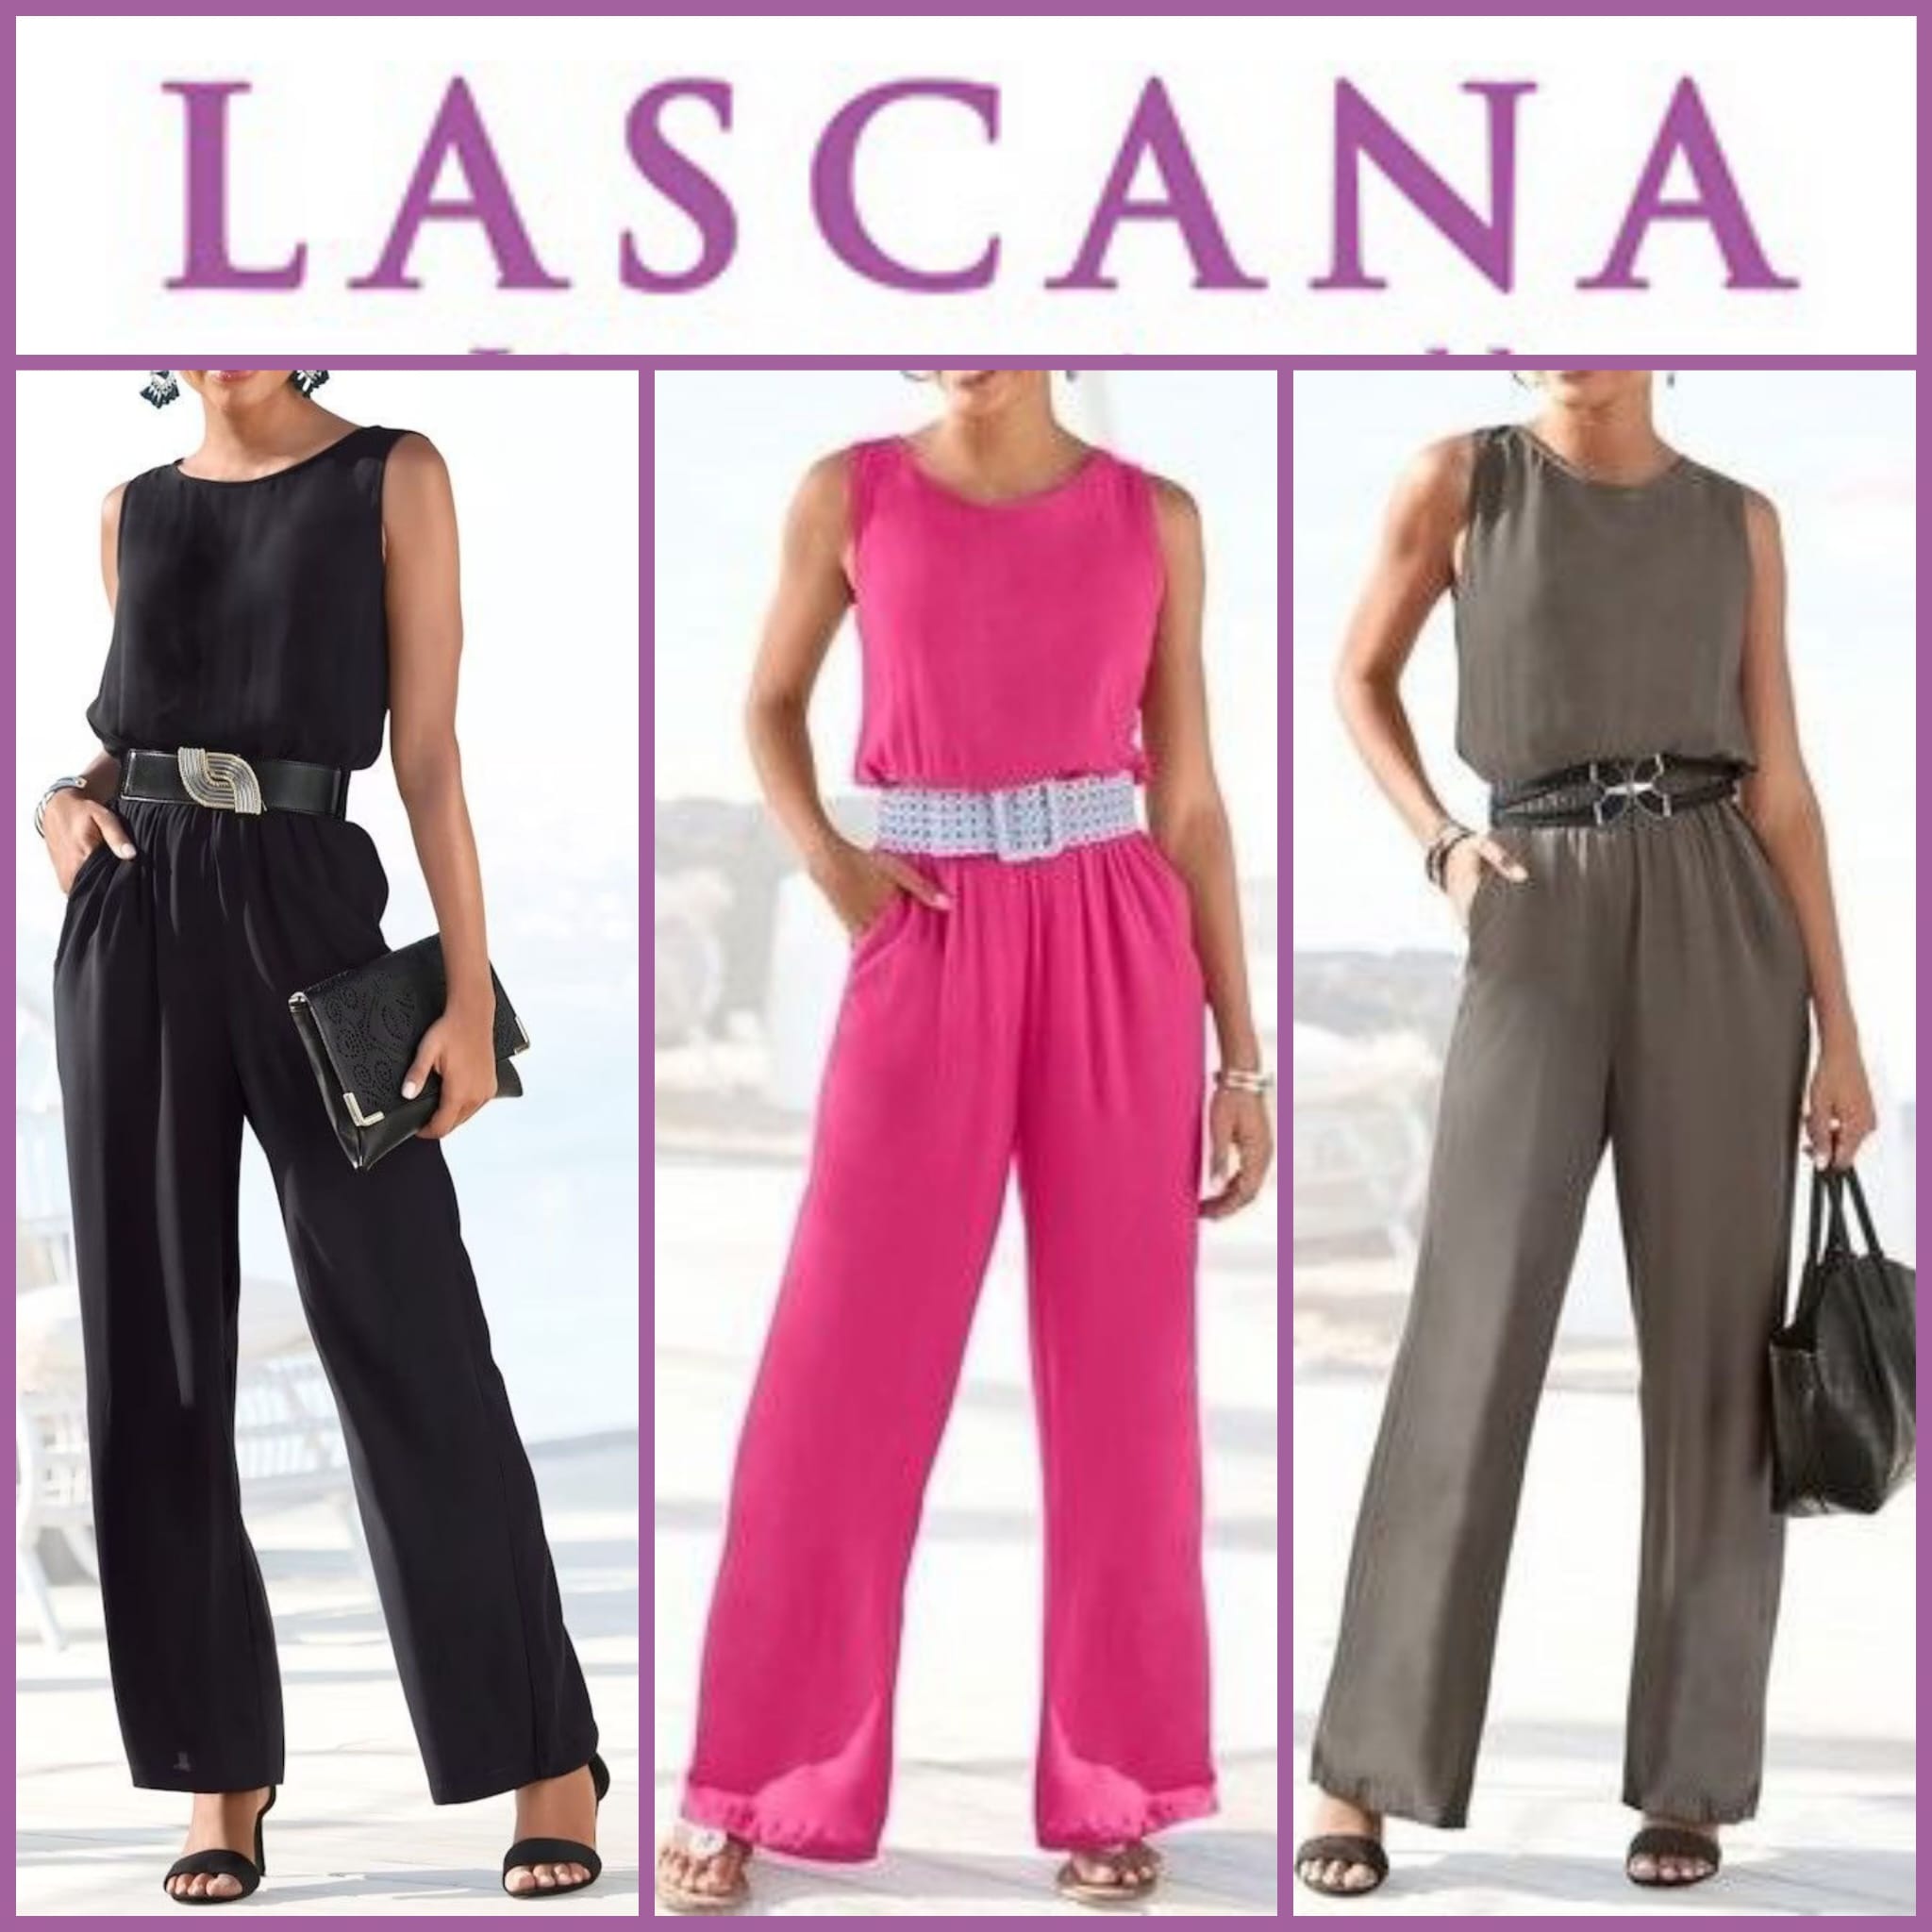 Women's summer jumpsuits by Lascana